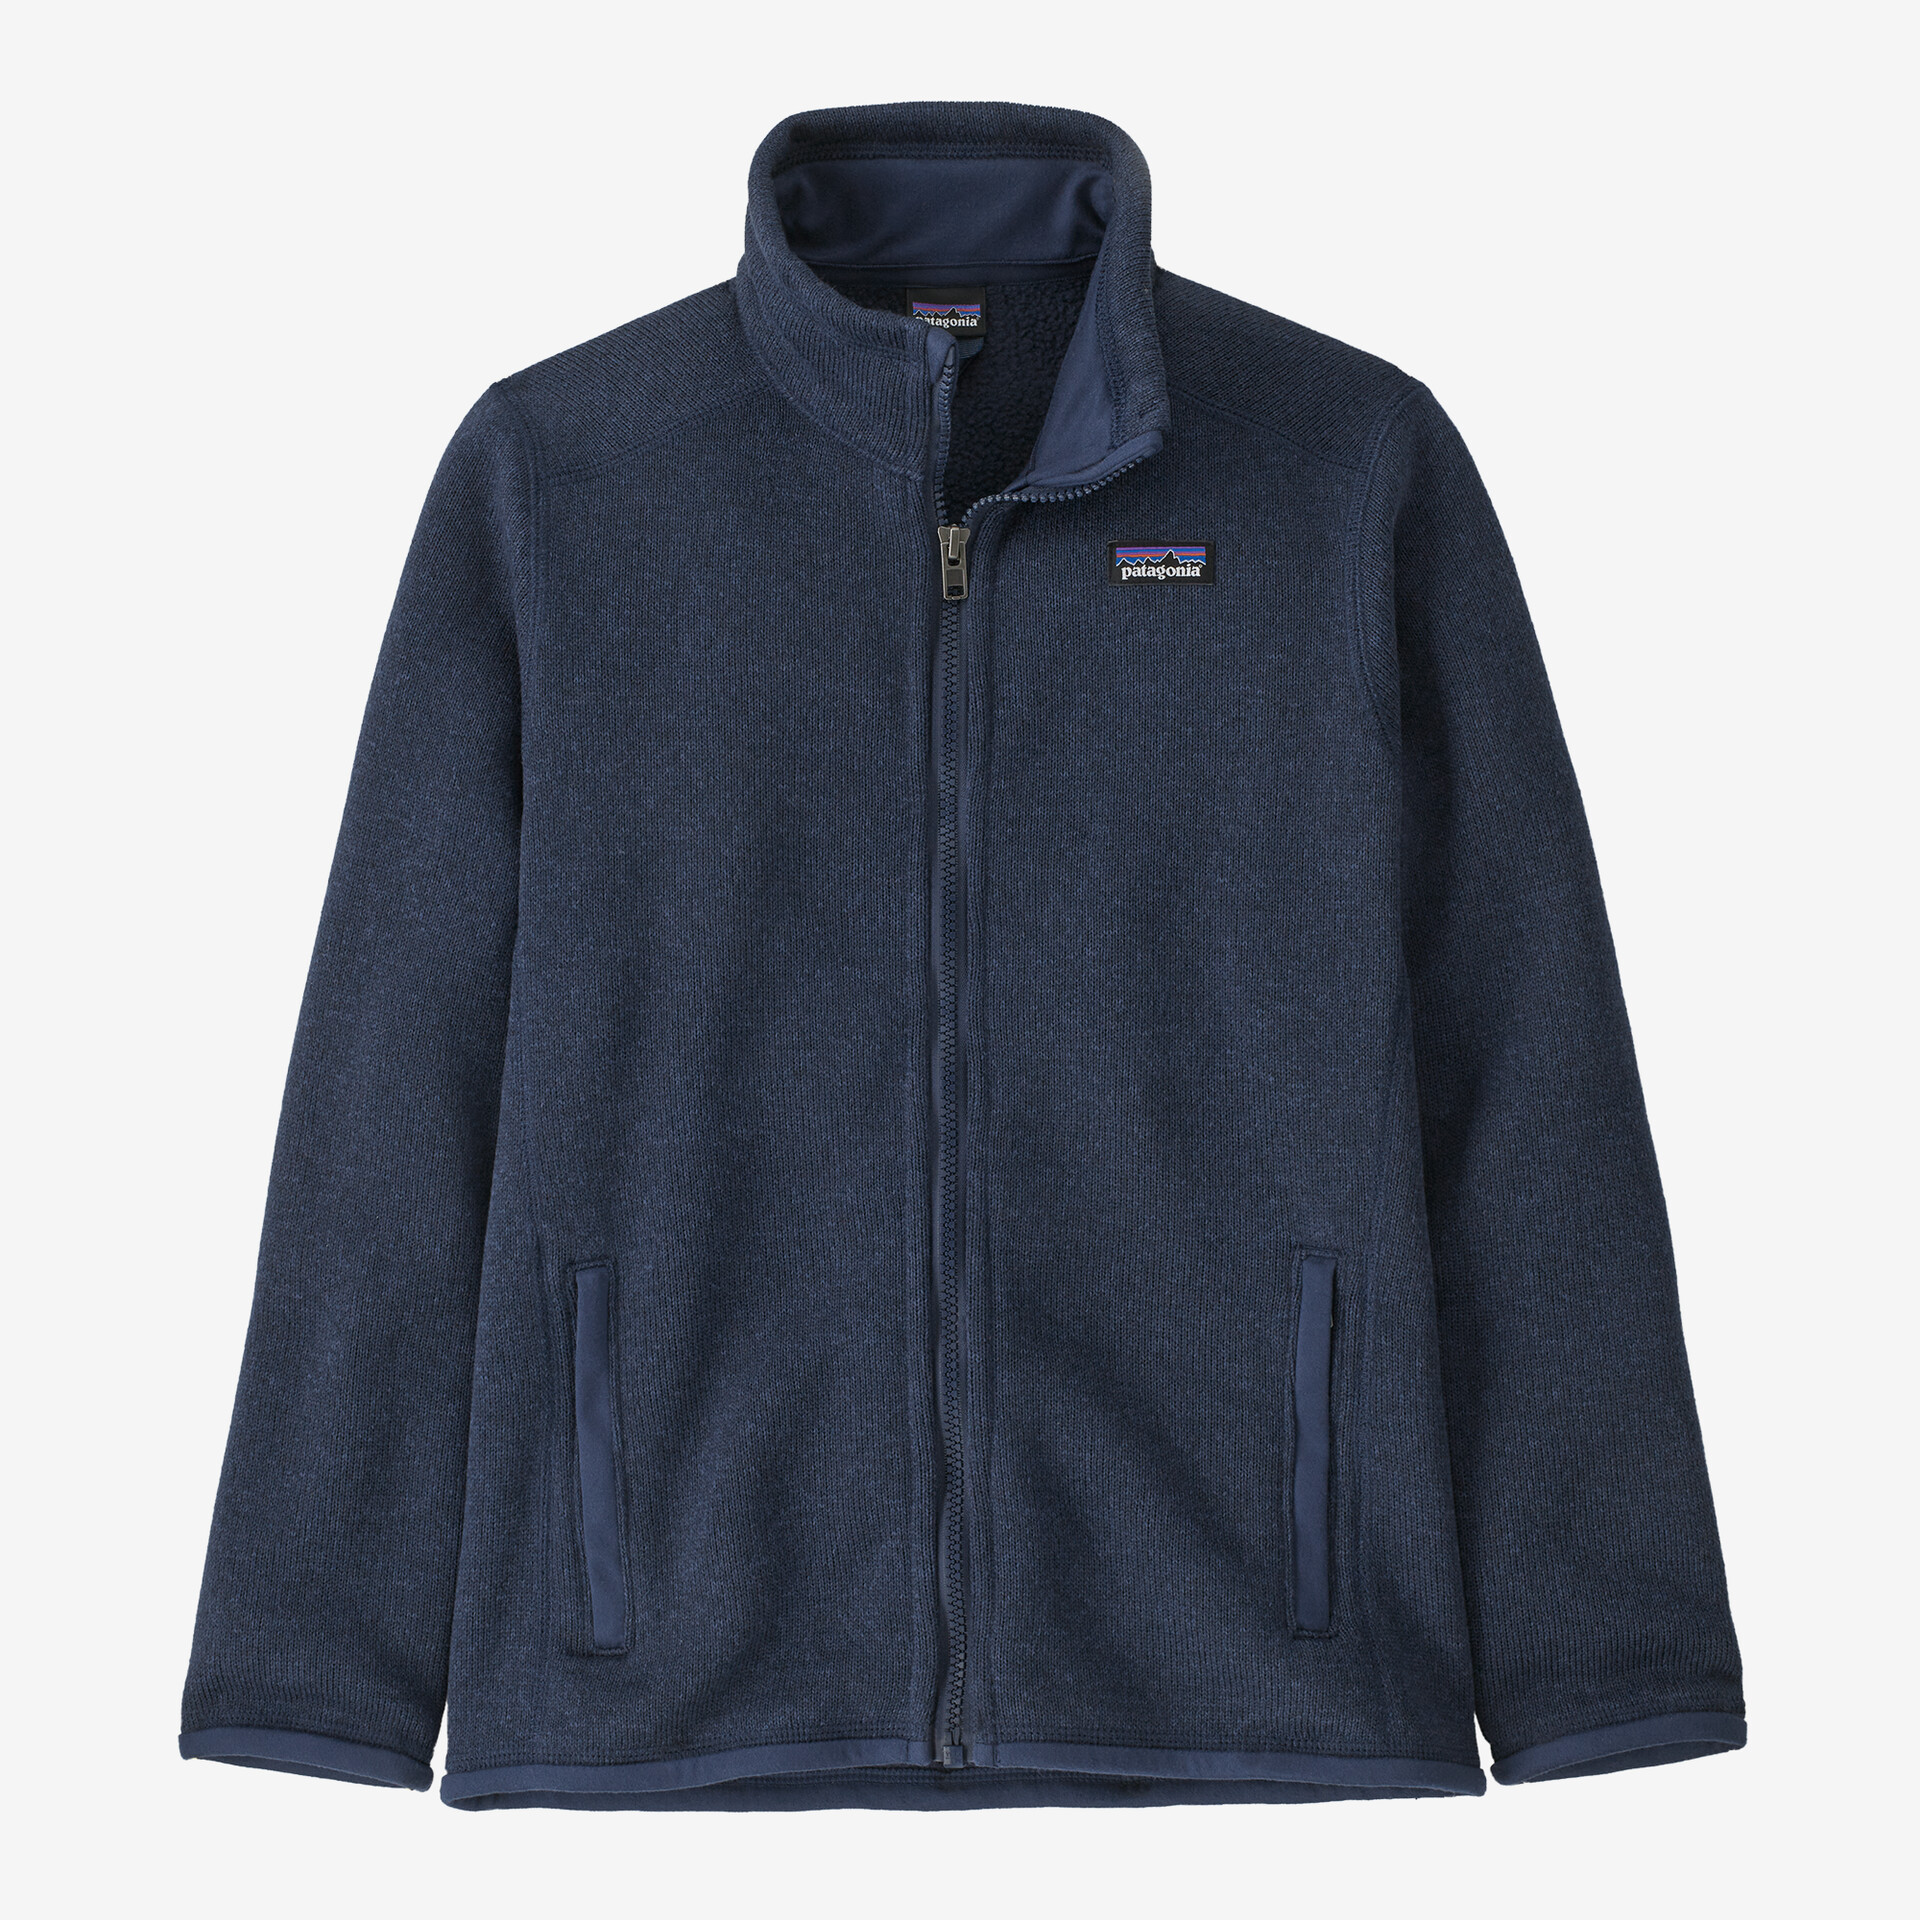 Детский свитер, флисовая куртка Patagonia, новый темно-синий autumn new sweater cardigan men s long sleeved korean version of the trend lapel sweater jacket casual jacket jacket